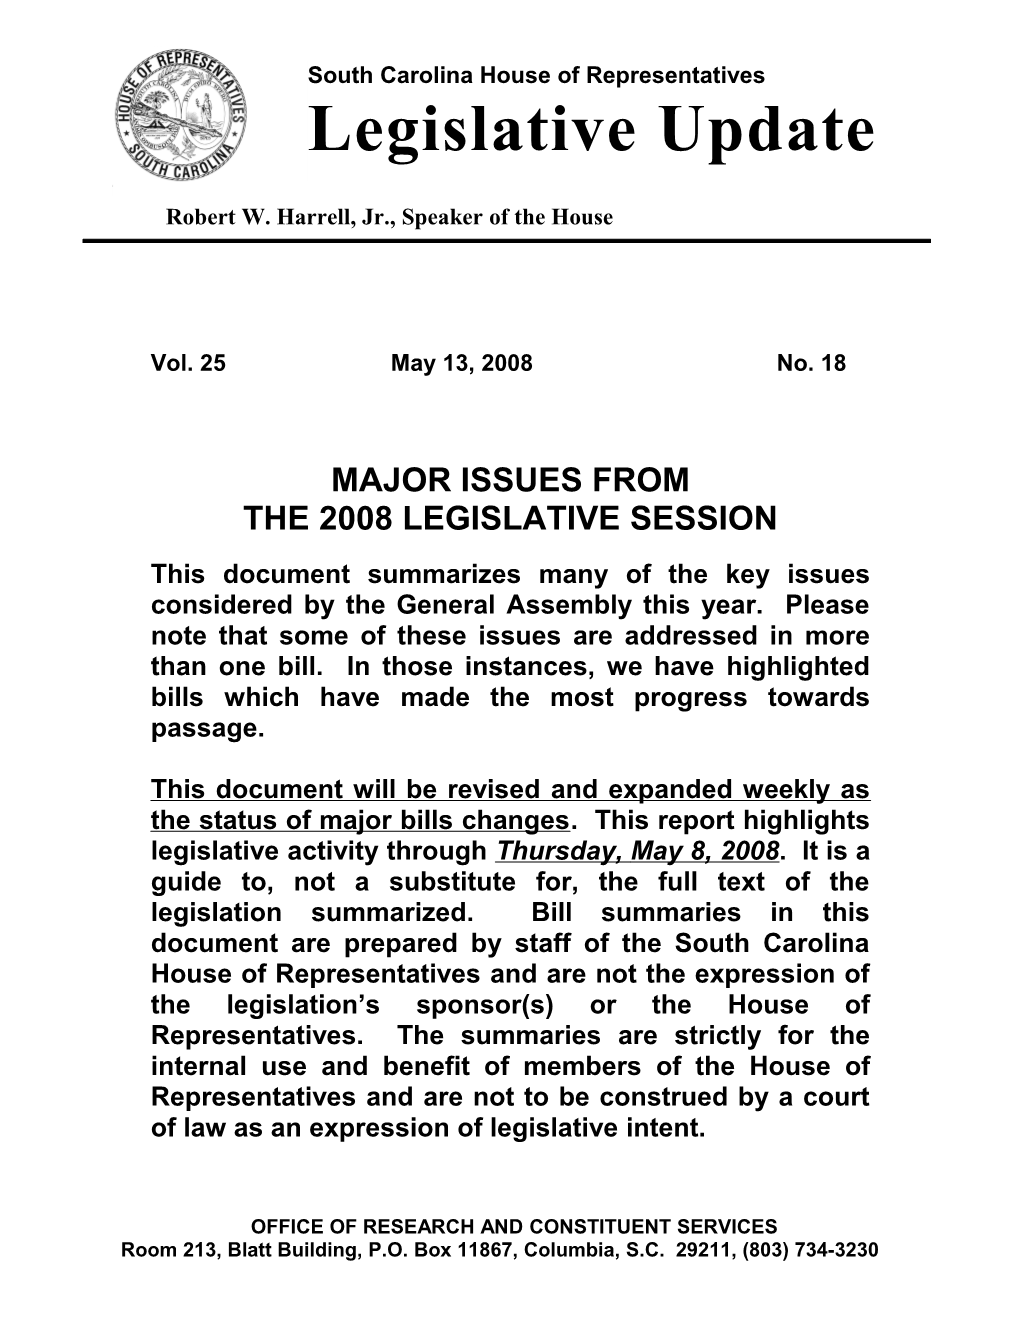 Legislative Update - Vol. 25 No. 18 May 13, 2008 - South Carolina Legislature Online